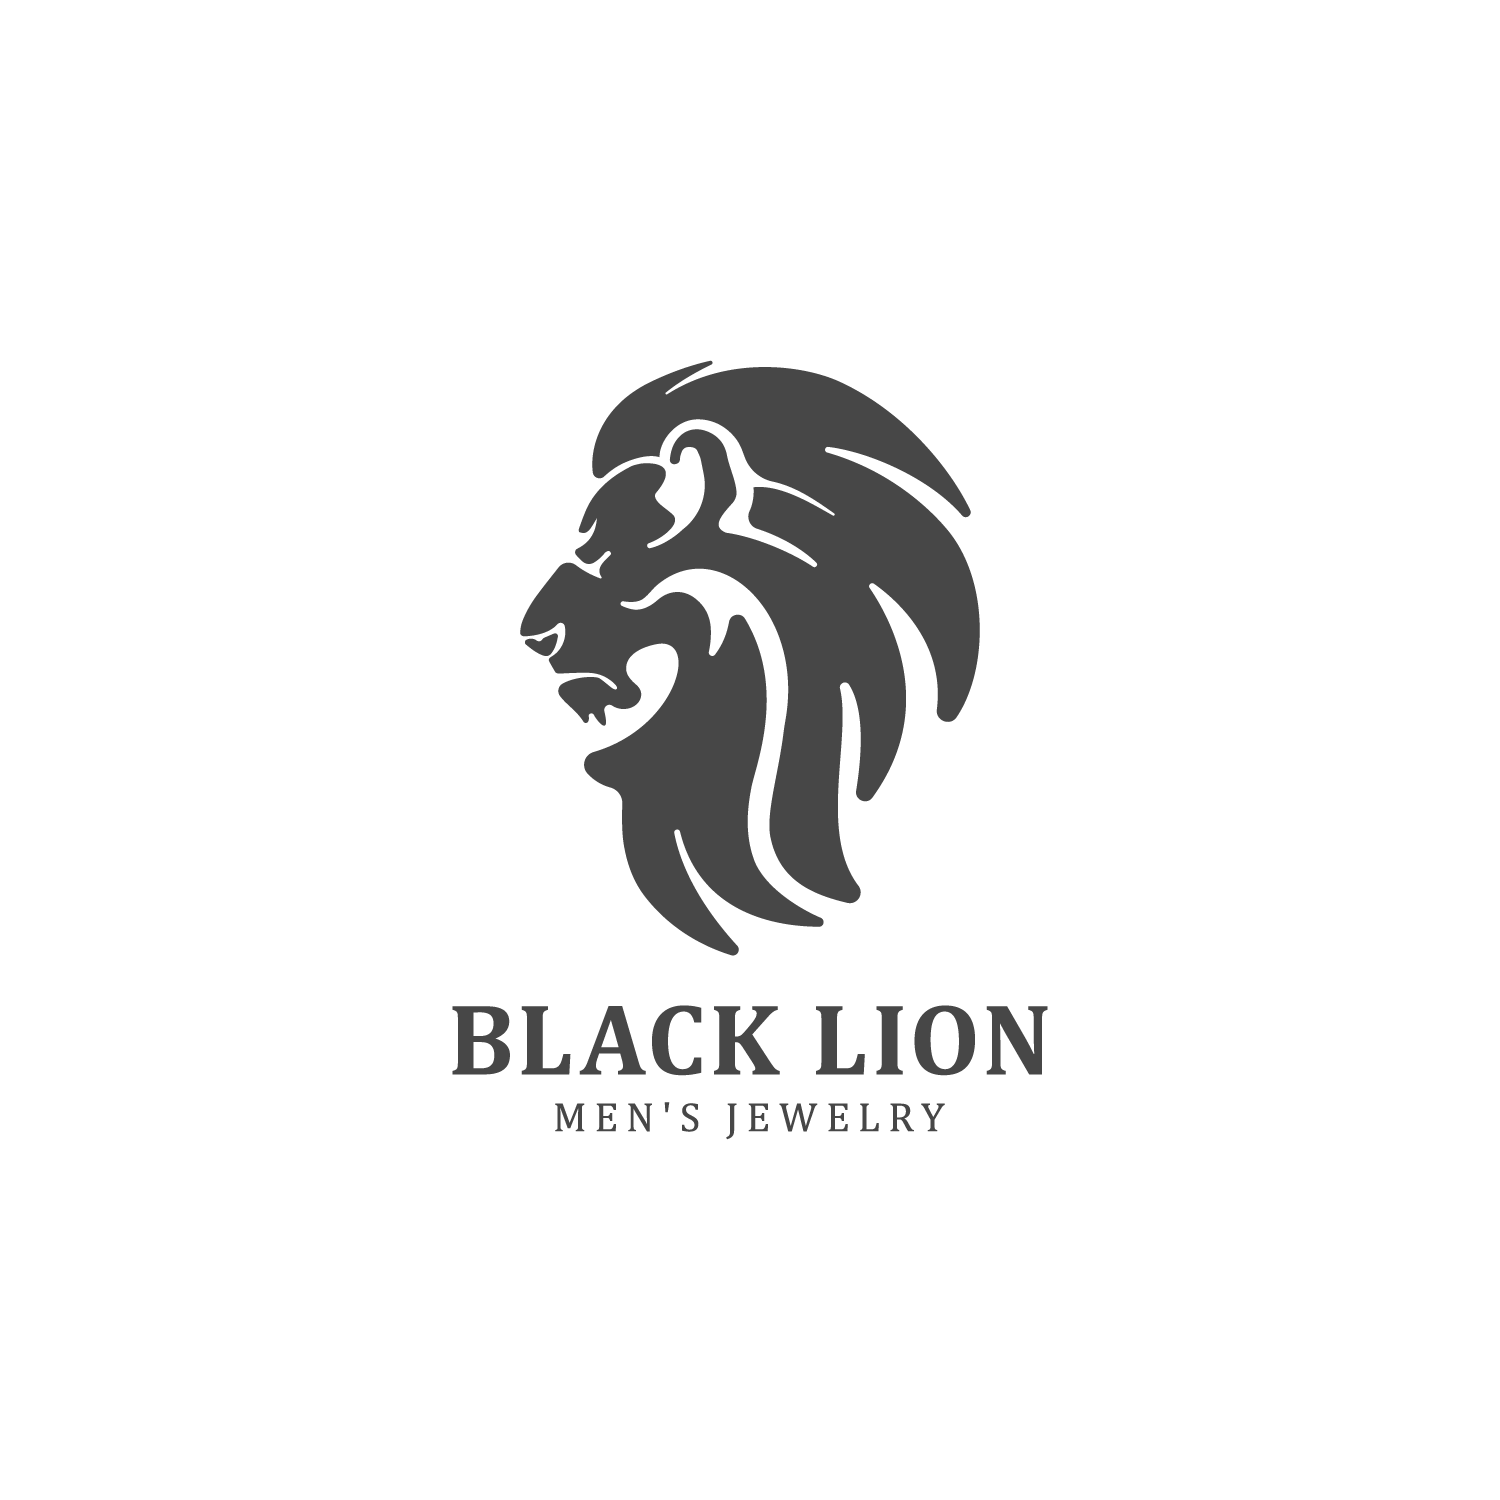 Black Lion Logo - Bold, Modern, Jewelry Logo Design for Black Lion by cools. Design